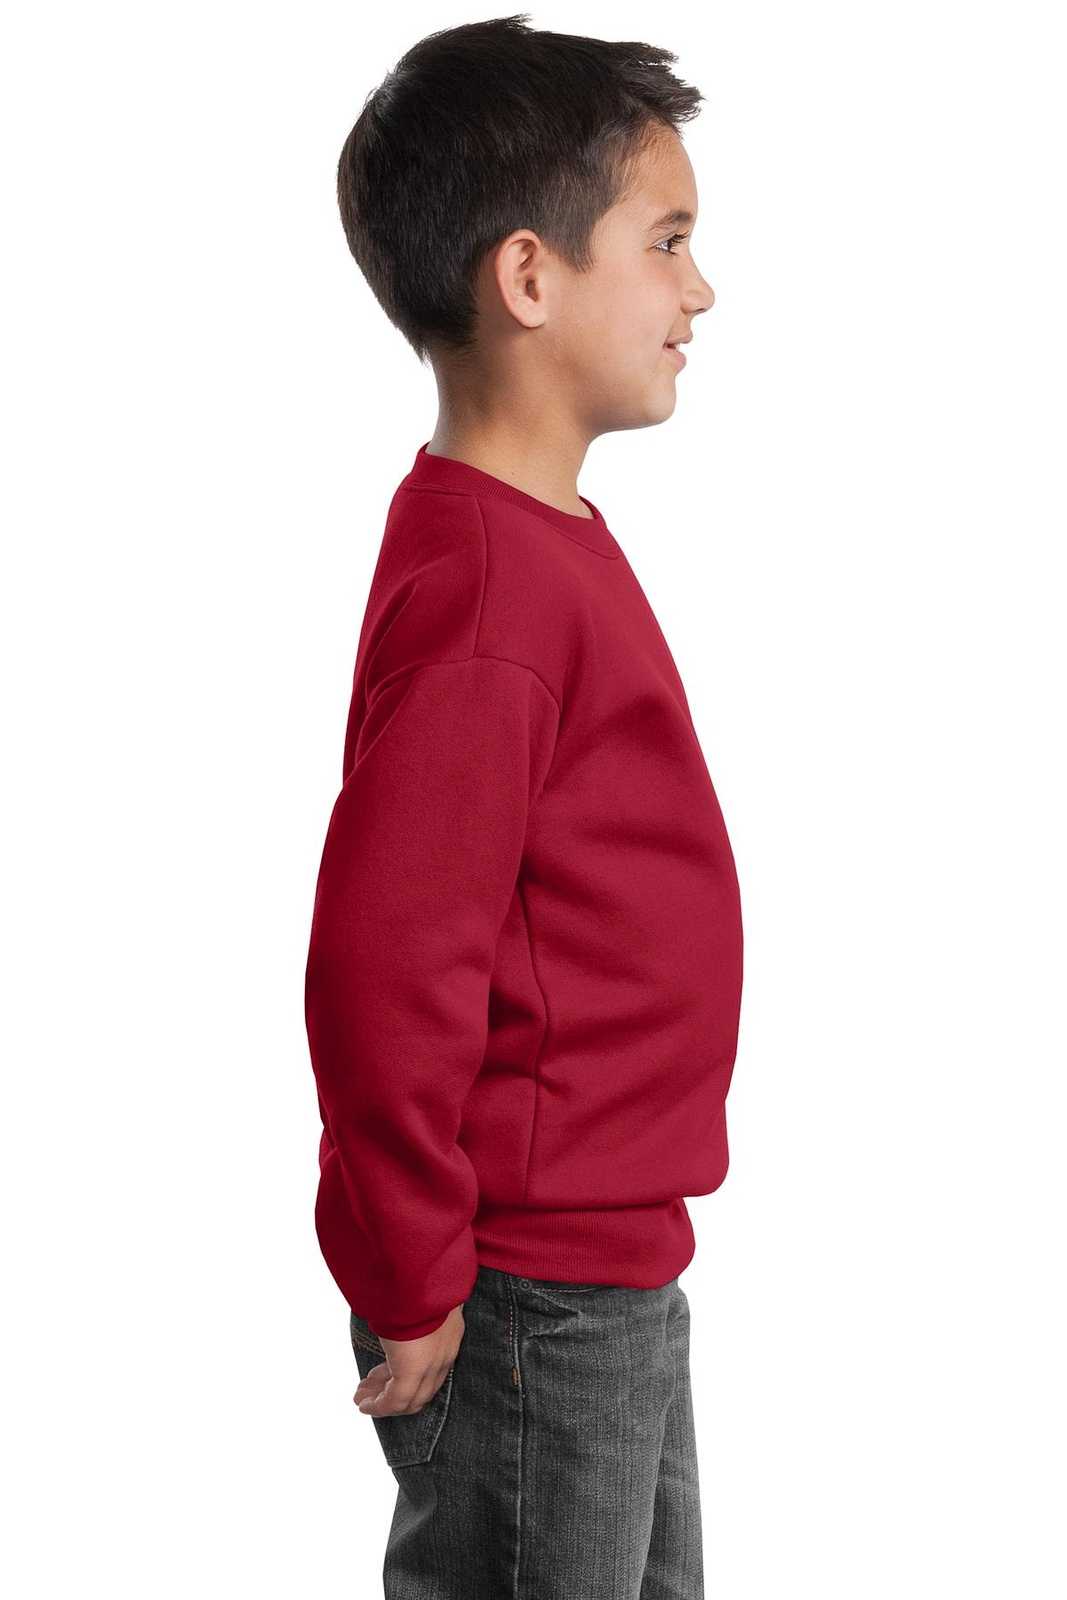 Port &amp; Company PC90Y Youth Core Fleece Crewneck Sweatshirt - Red - HIT a Double - 3